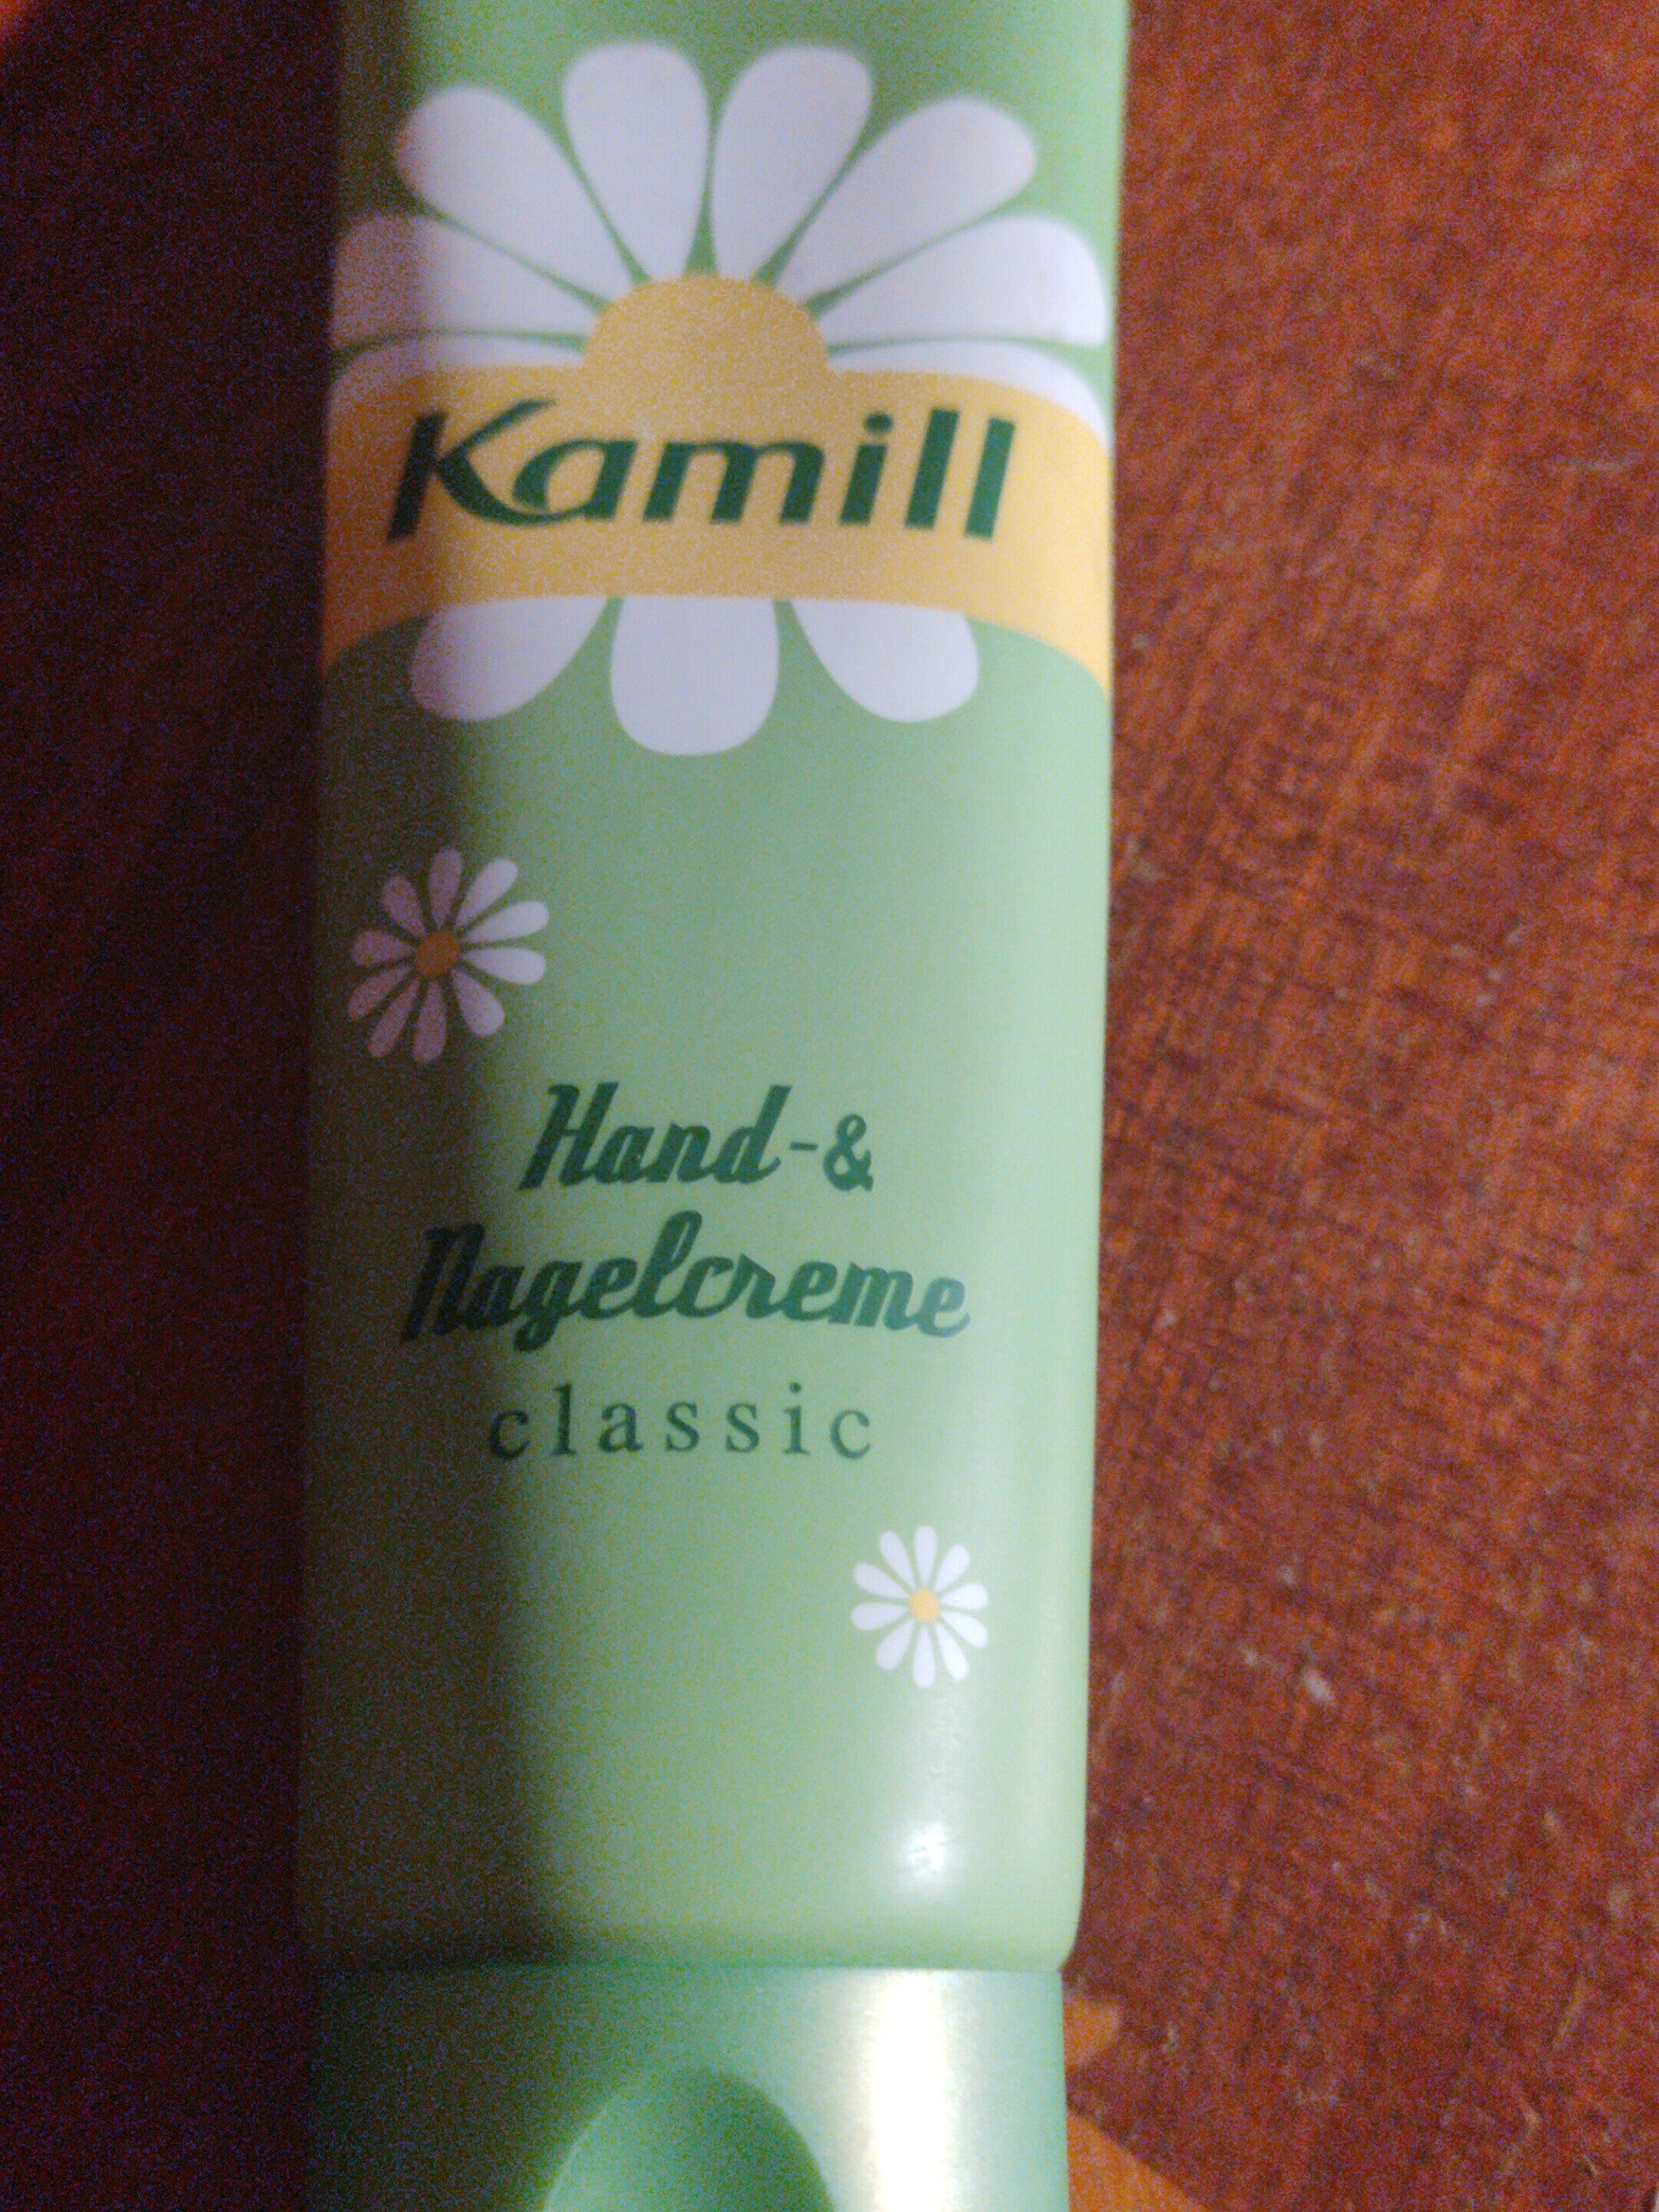 Kamill - Hand & Nagelcrem Classic - Produkt - de